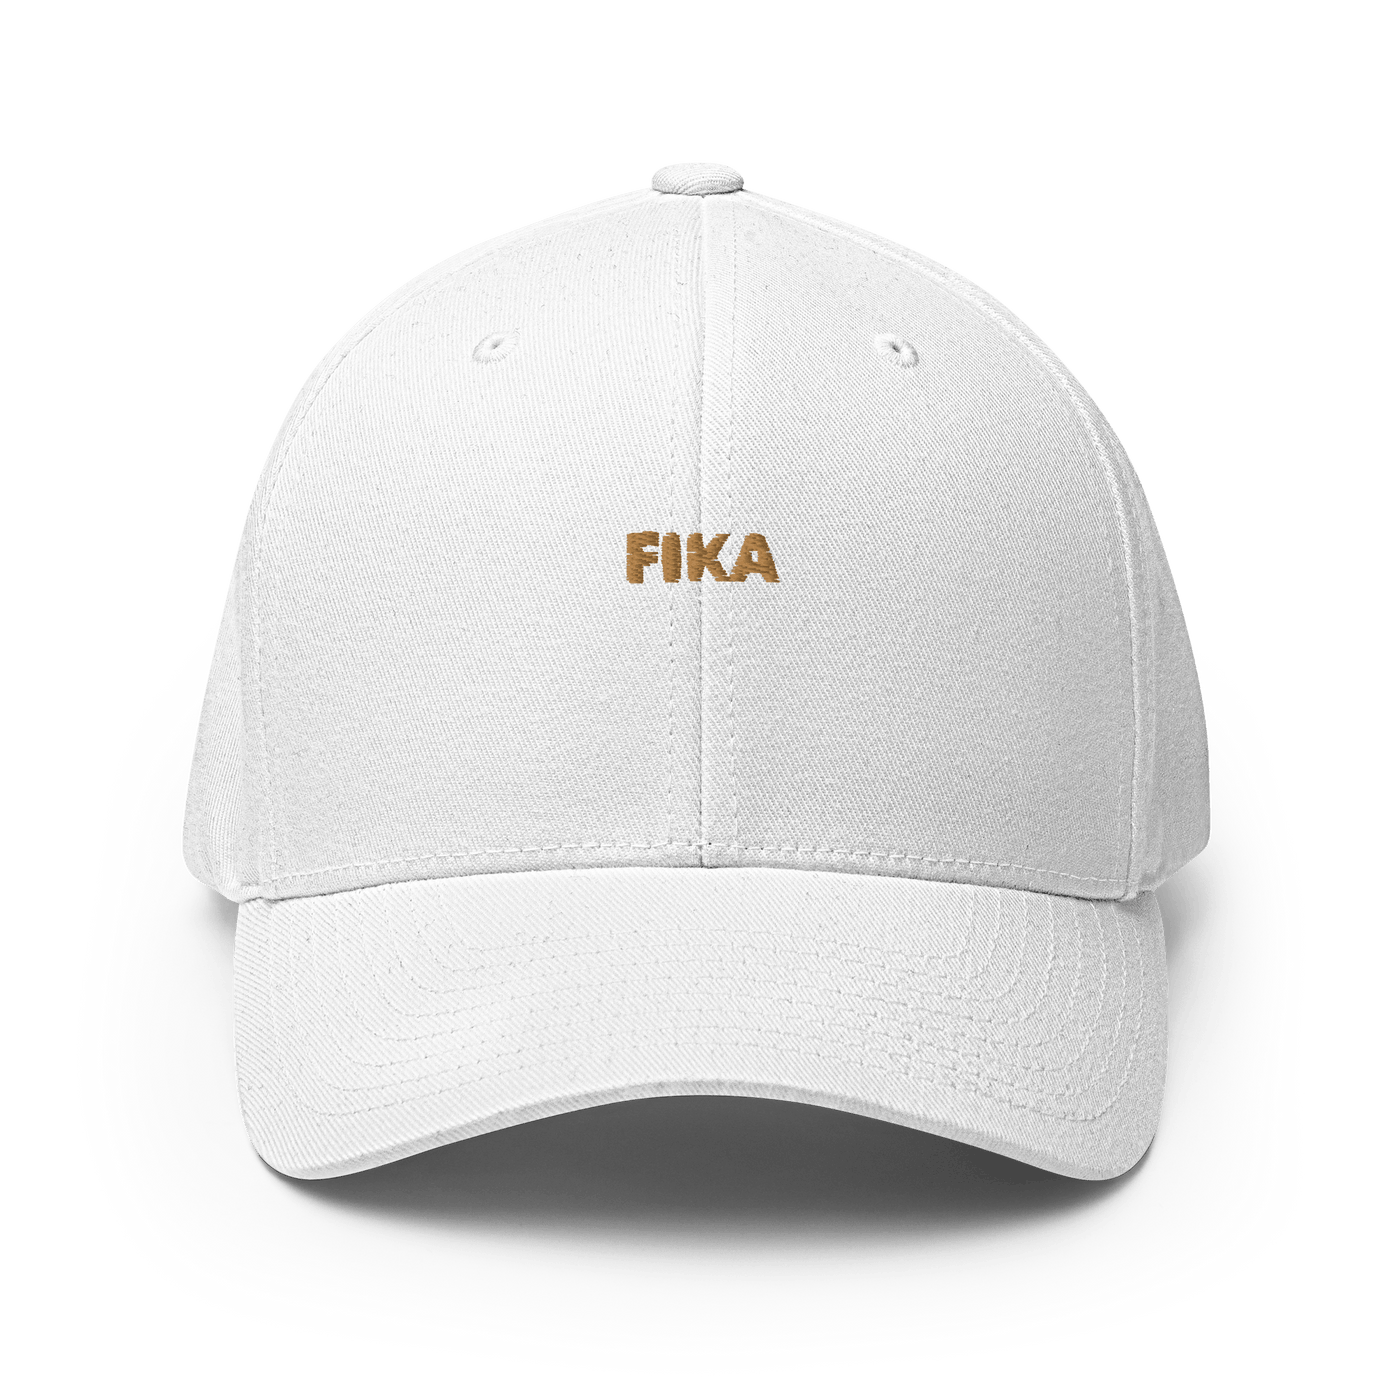 FIKA Flexfit cap - White - S/M - Just Another Cap Store